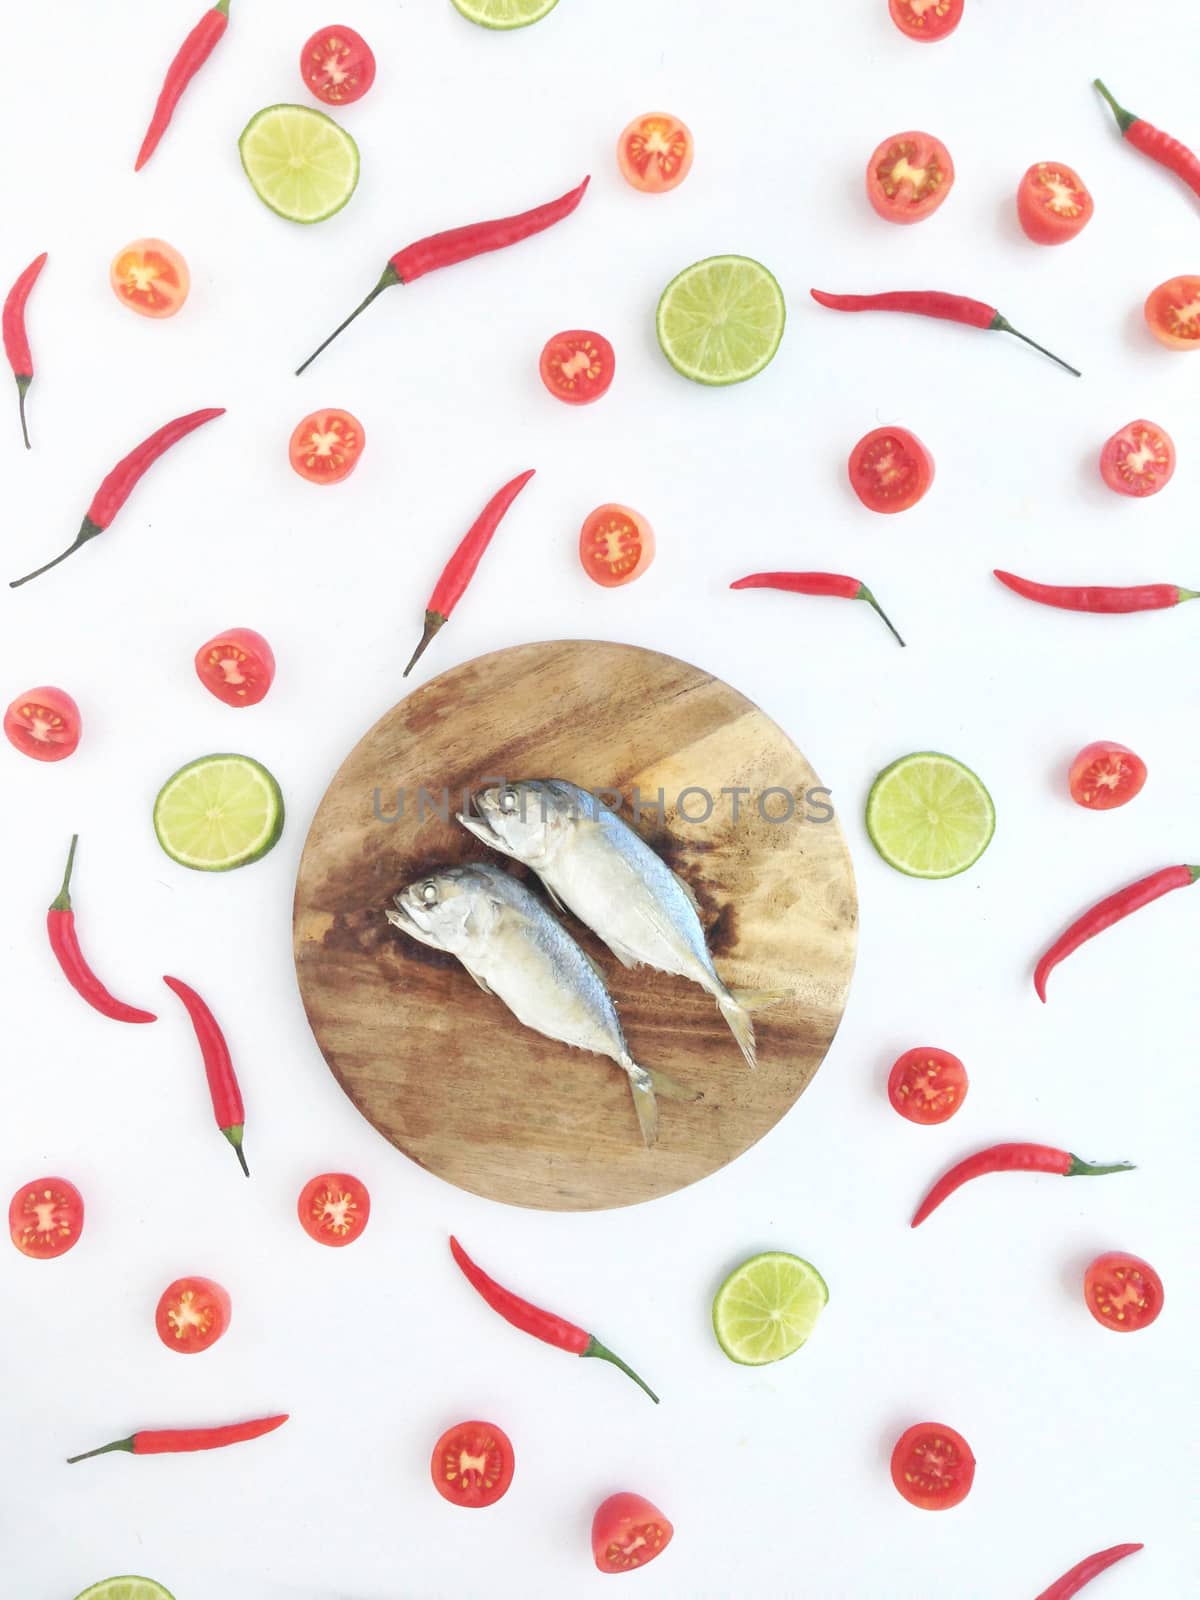 short mackerel among lime chili and tomato by Bowonpat